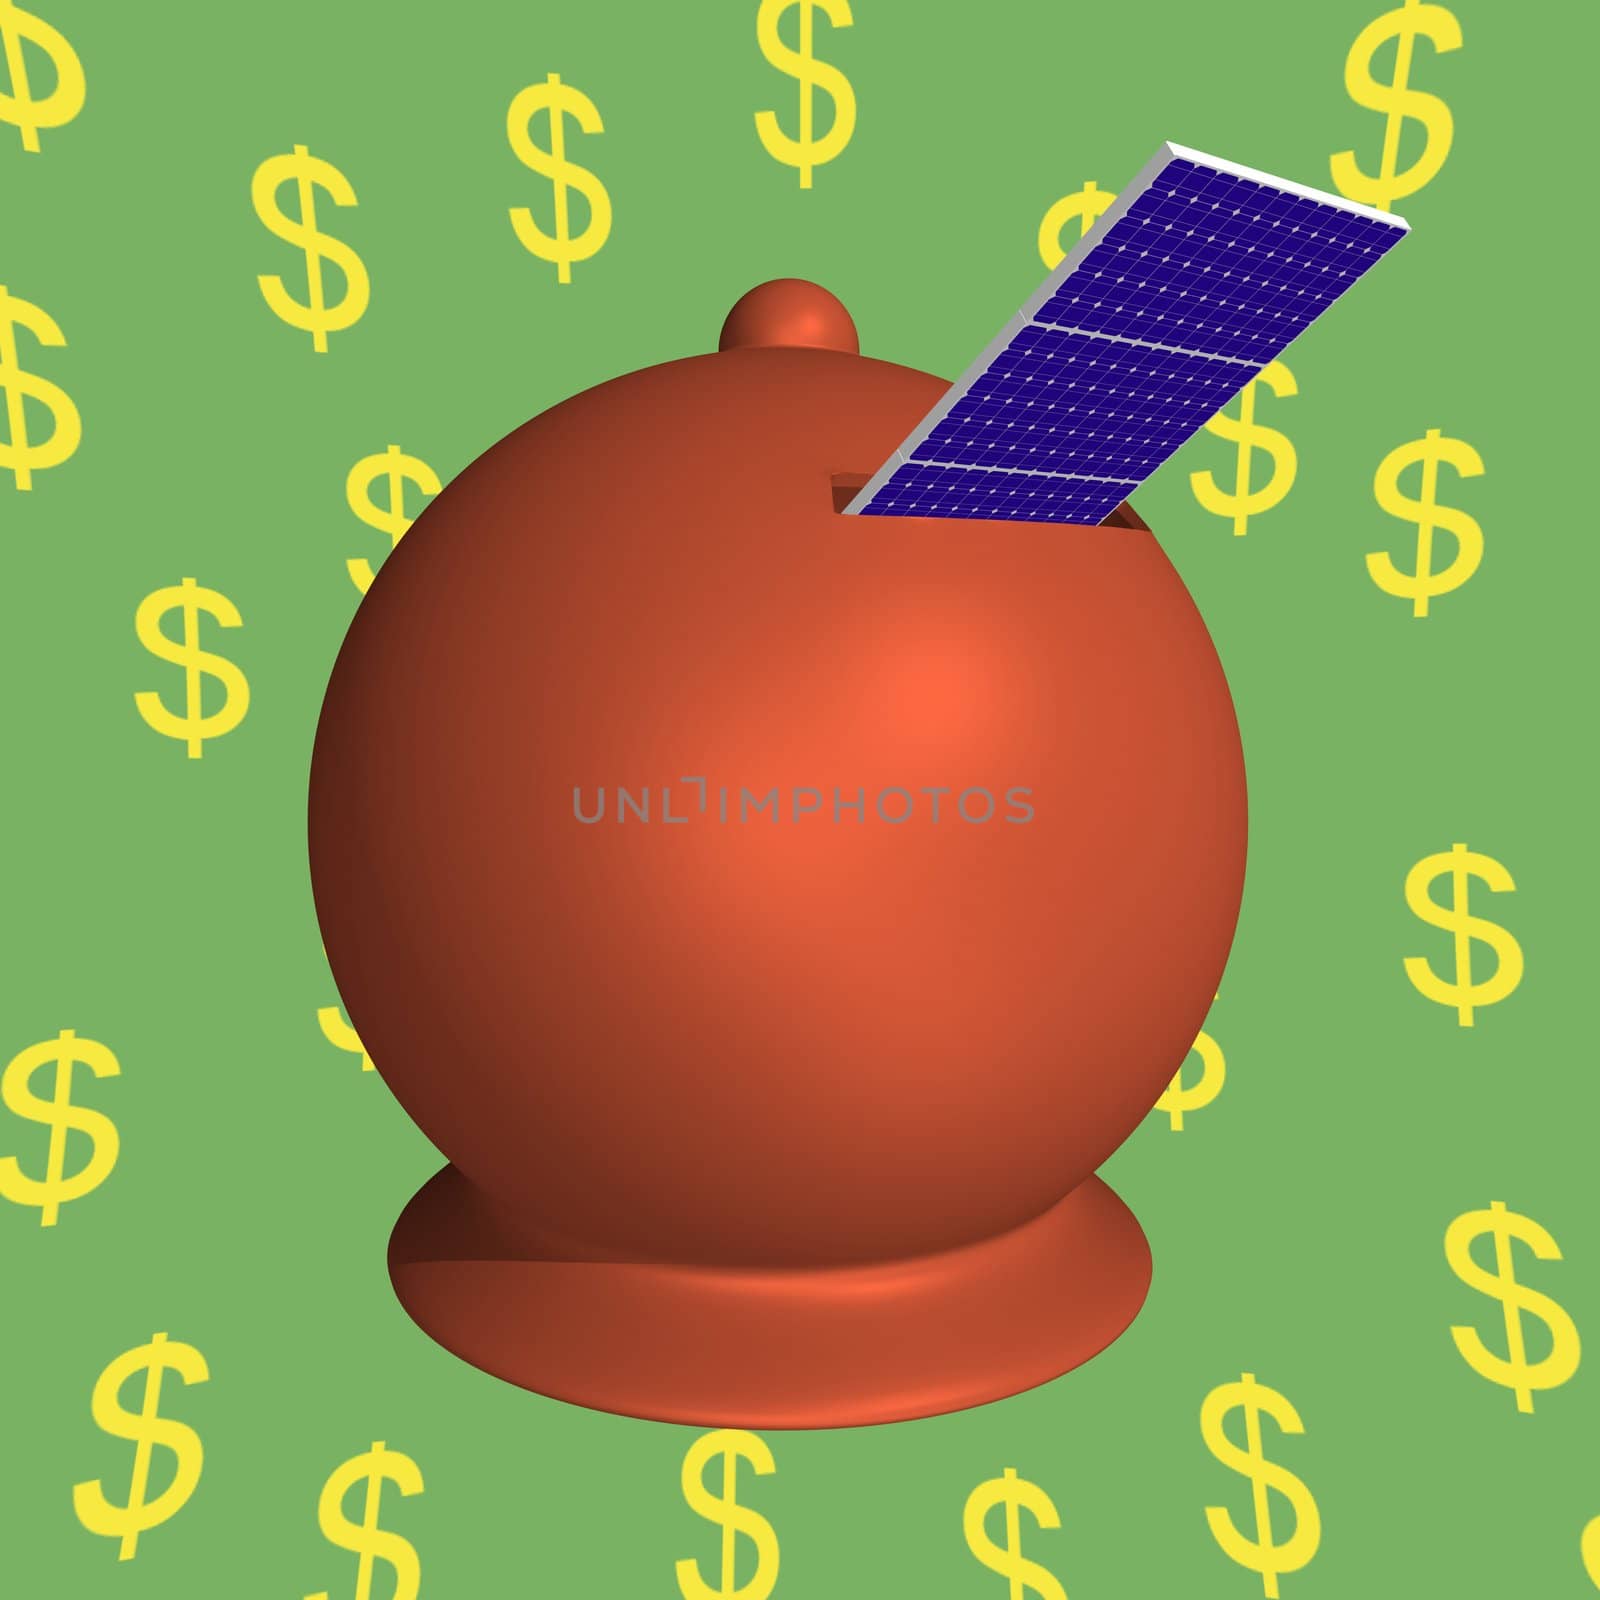 Moneybox solar panels by midani